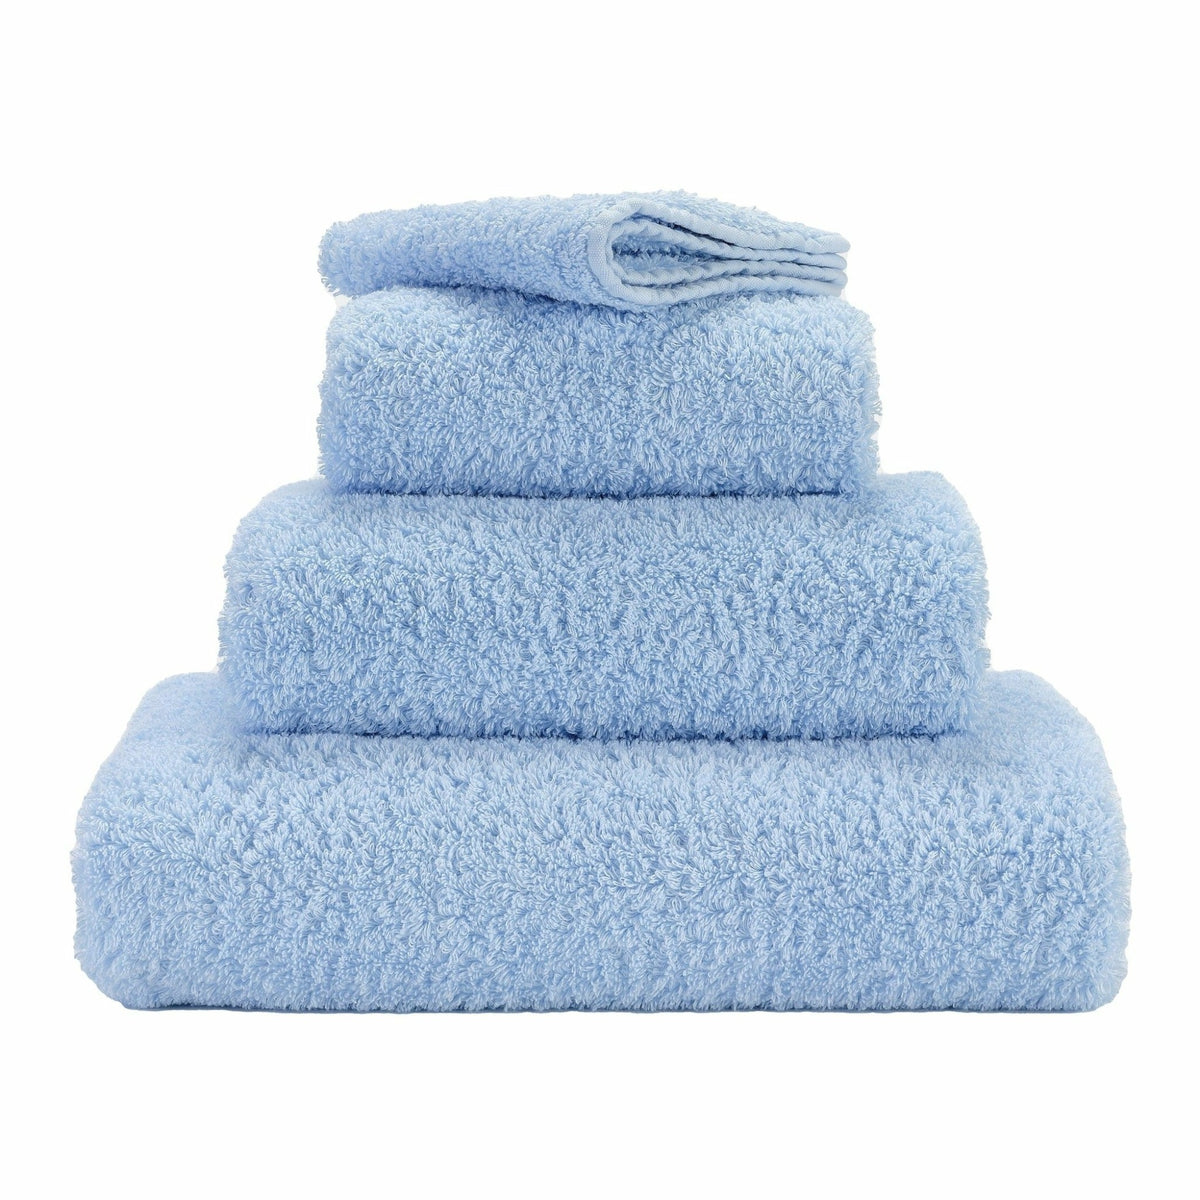 Hanging Blue Bubbles Bathroom or Kitchen Decorative Hand Towel